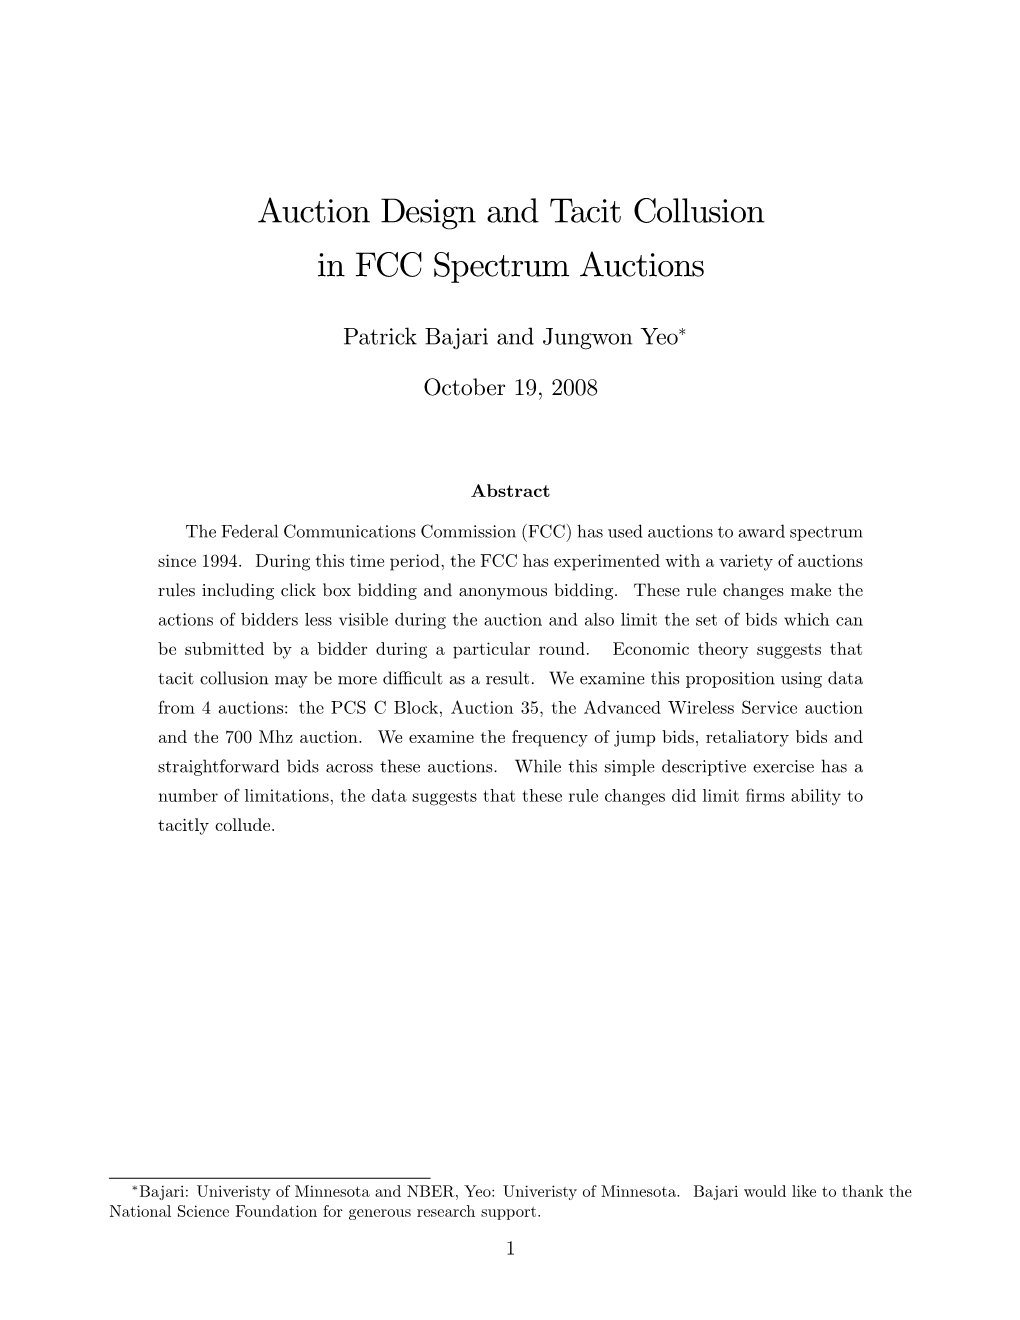 Auction Design and Tacit Collusion in FCC Spectrum Auctions